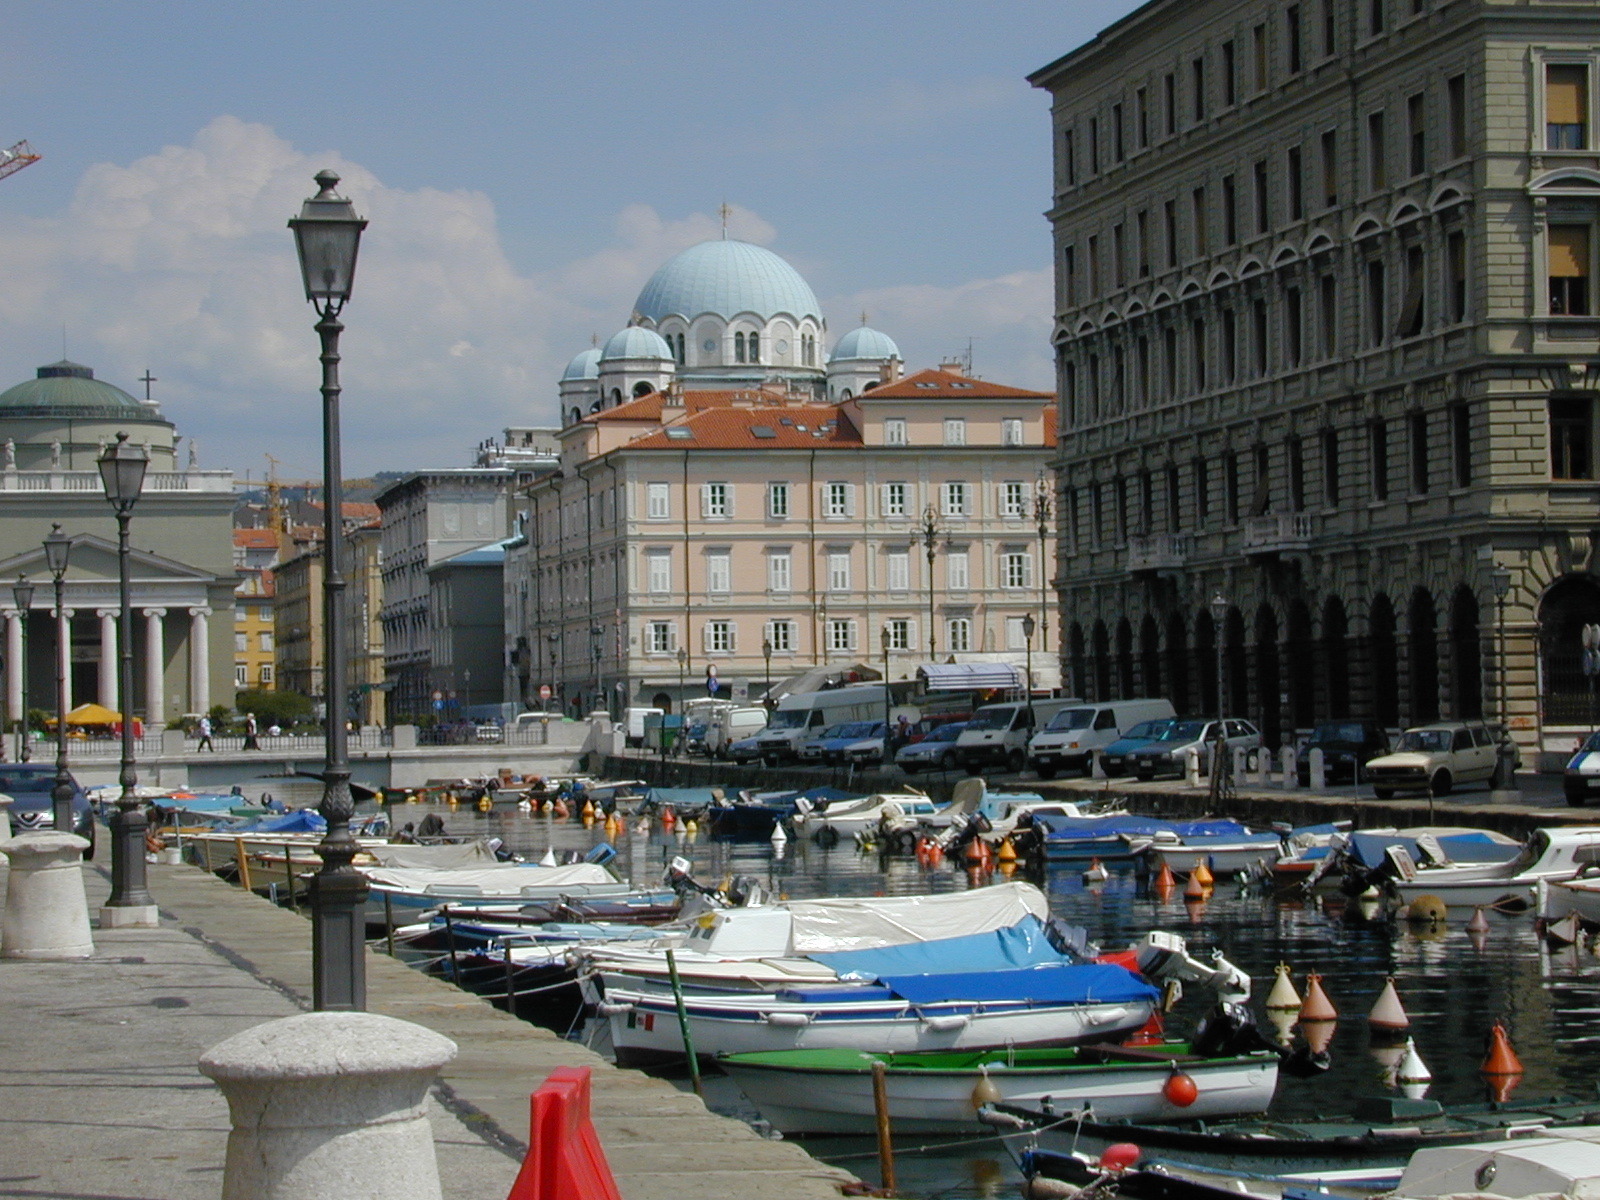 City of Trieste